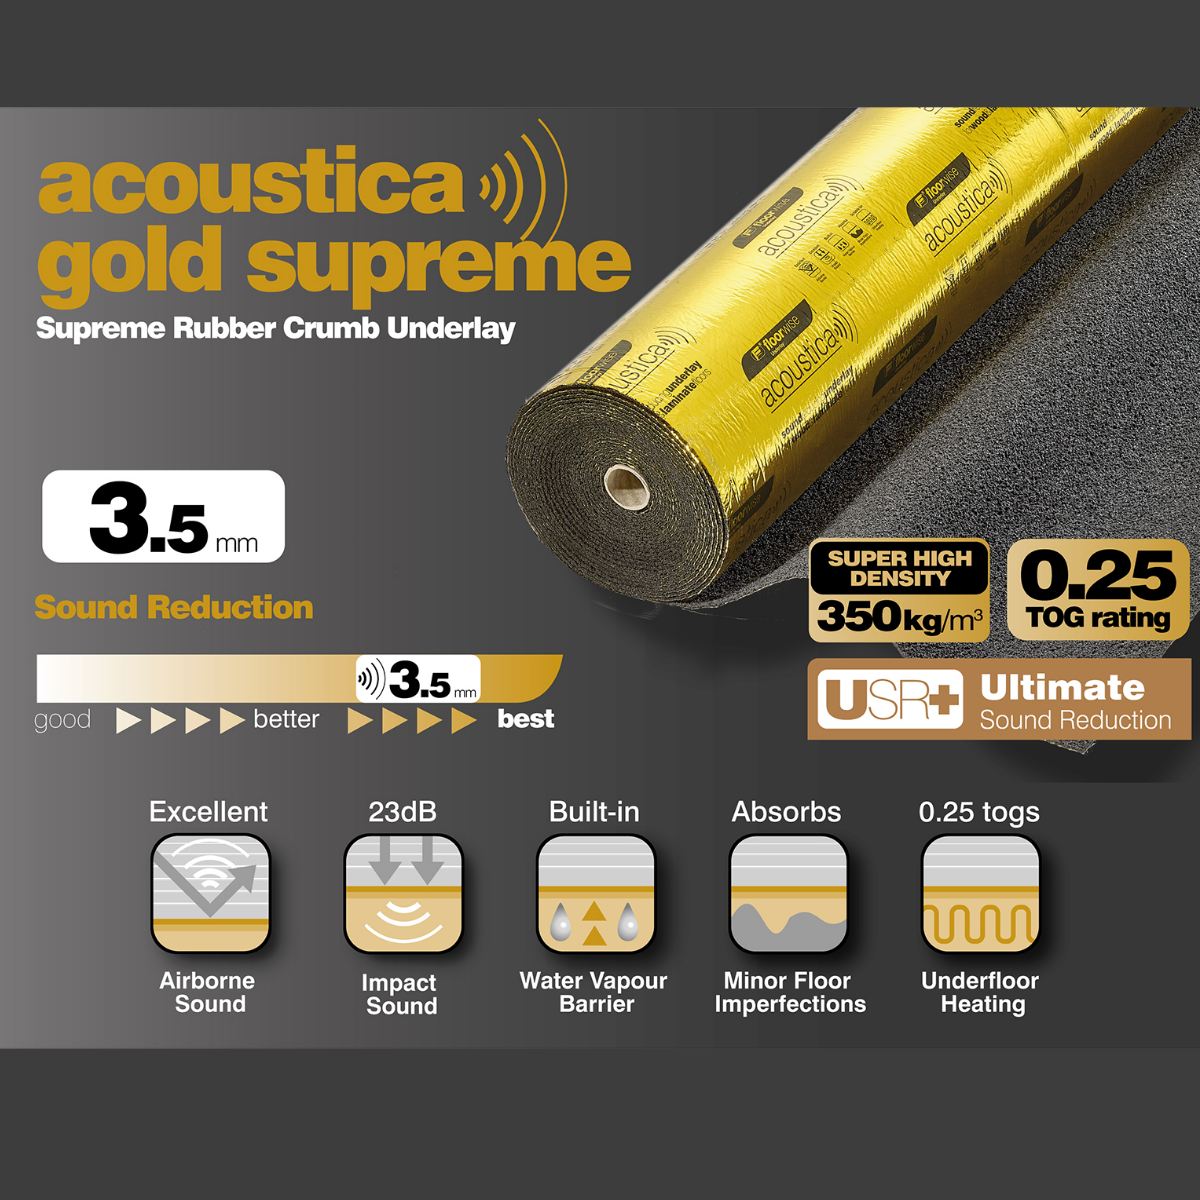 Gold Supreme 3.5mm Super High Density Laminate Underlay